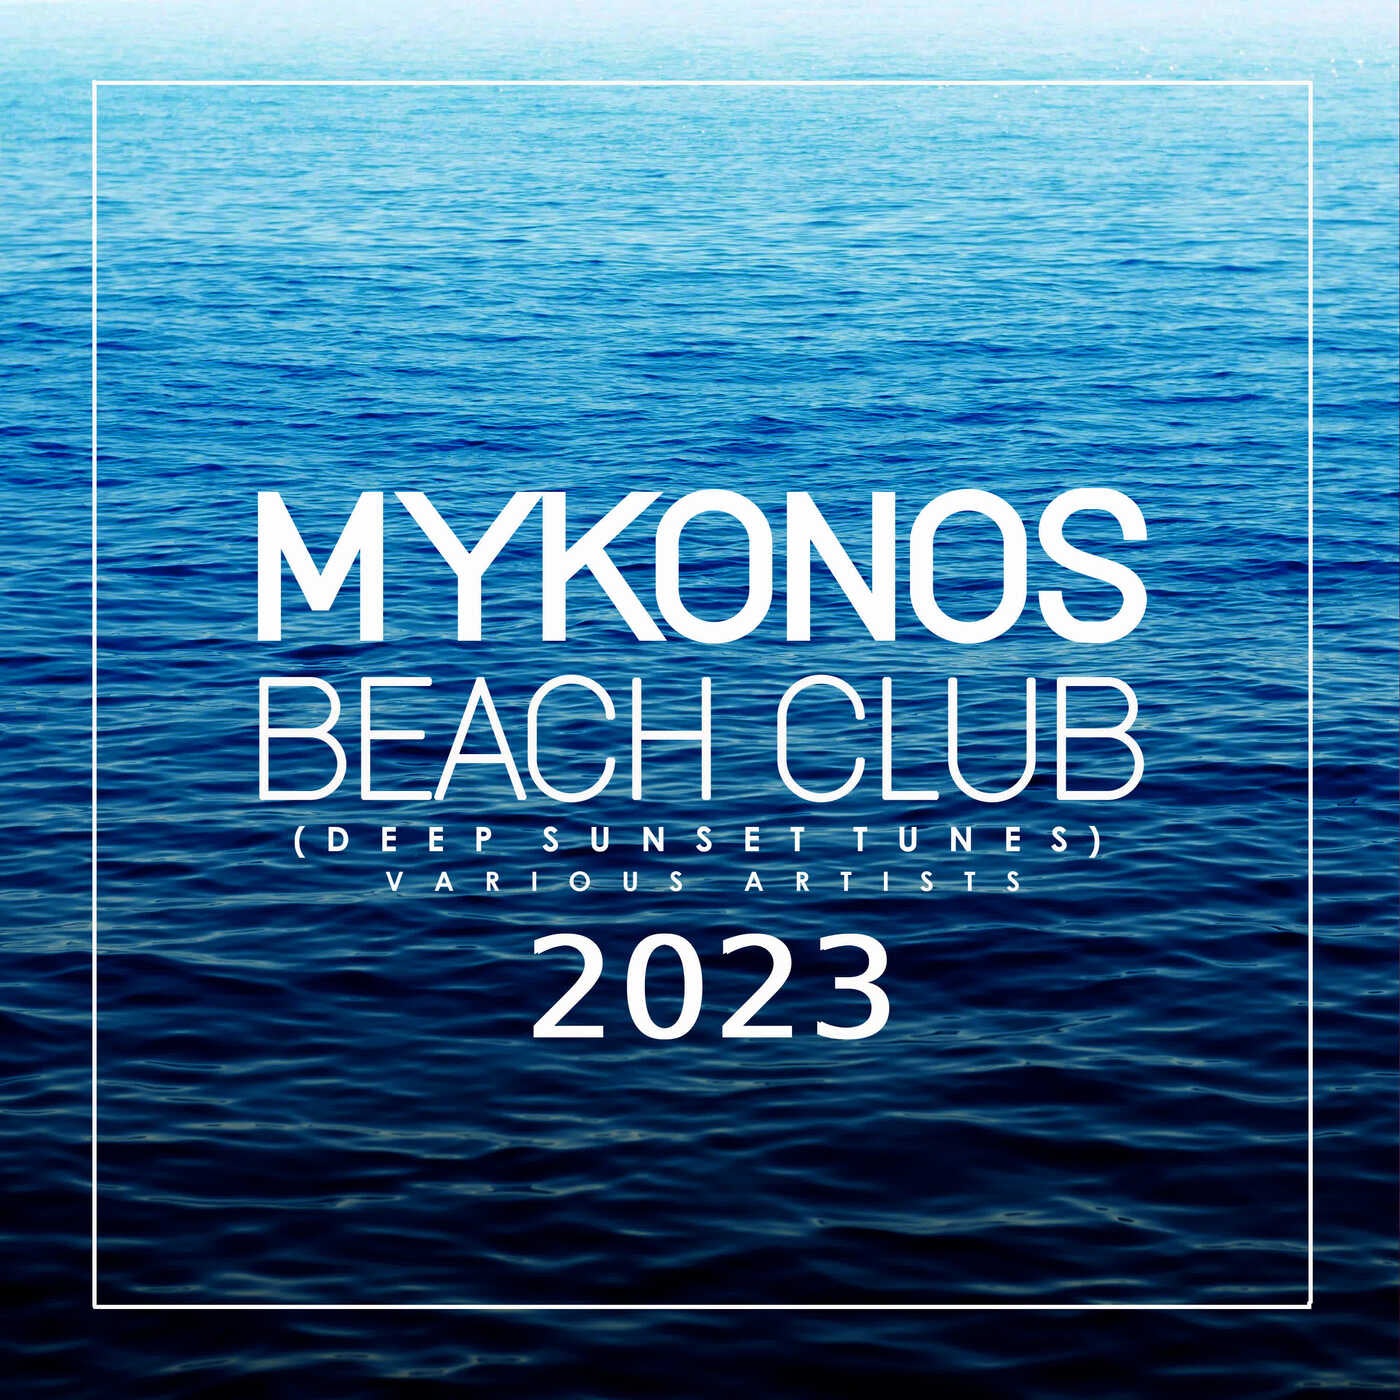 Mykonos Beach Club 2023 (Deep Sunset Tunes)